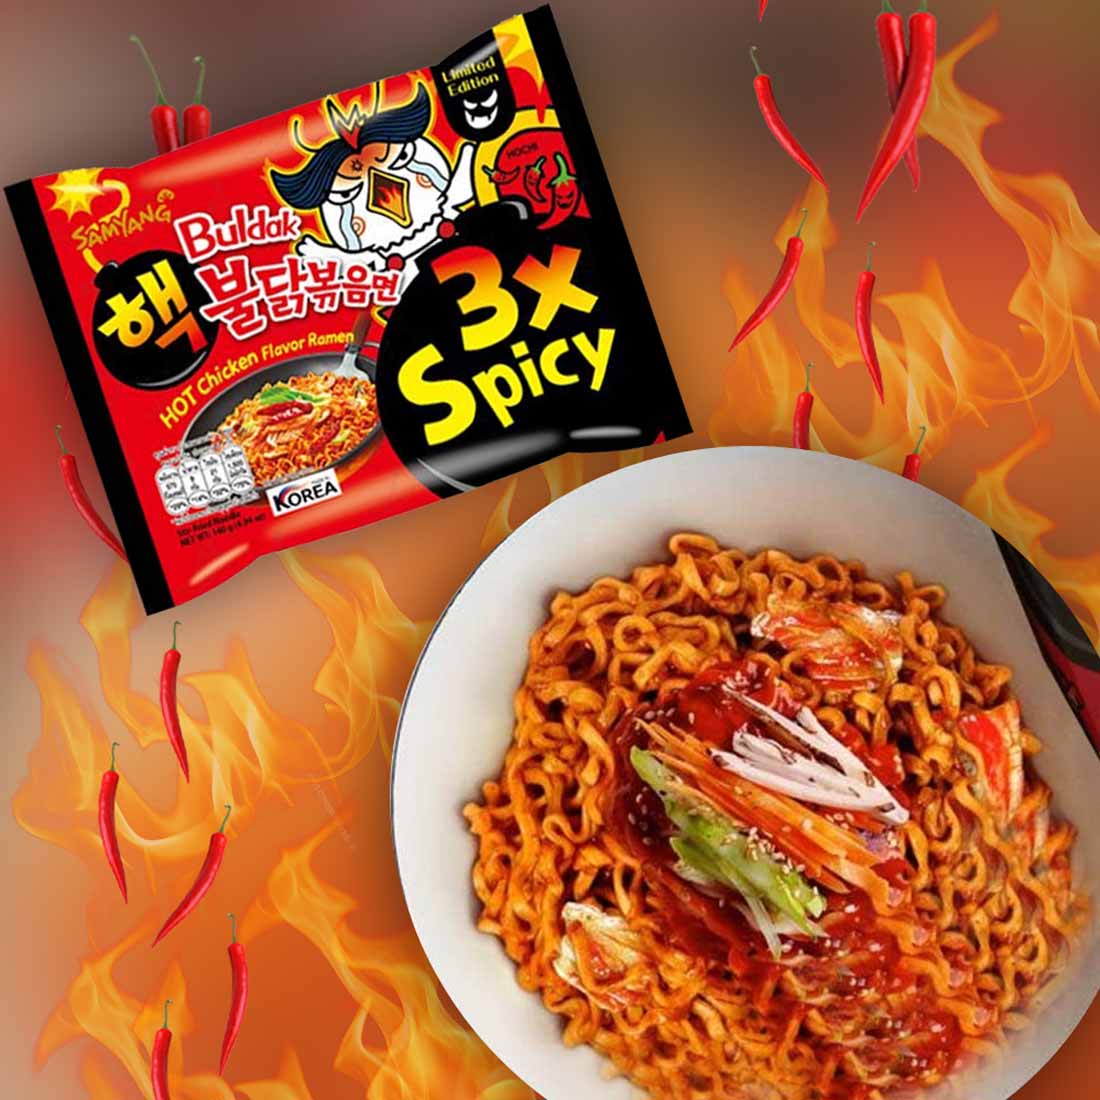 SAMYANG - Buldak 3x Spicy